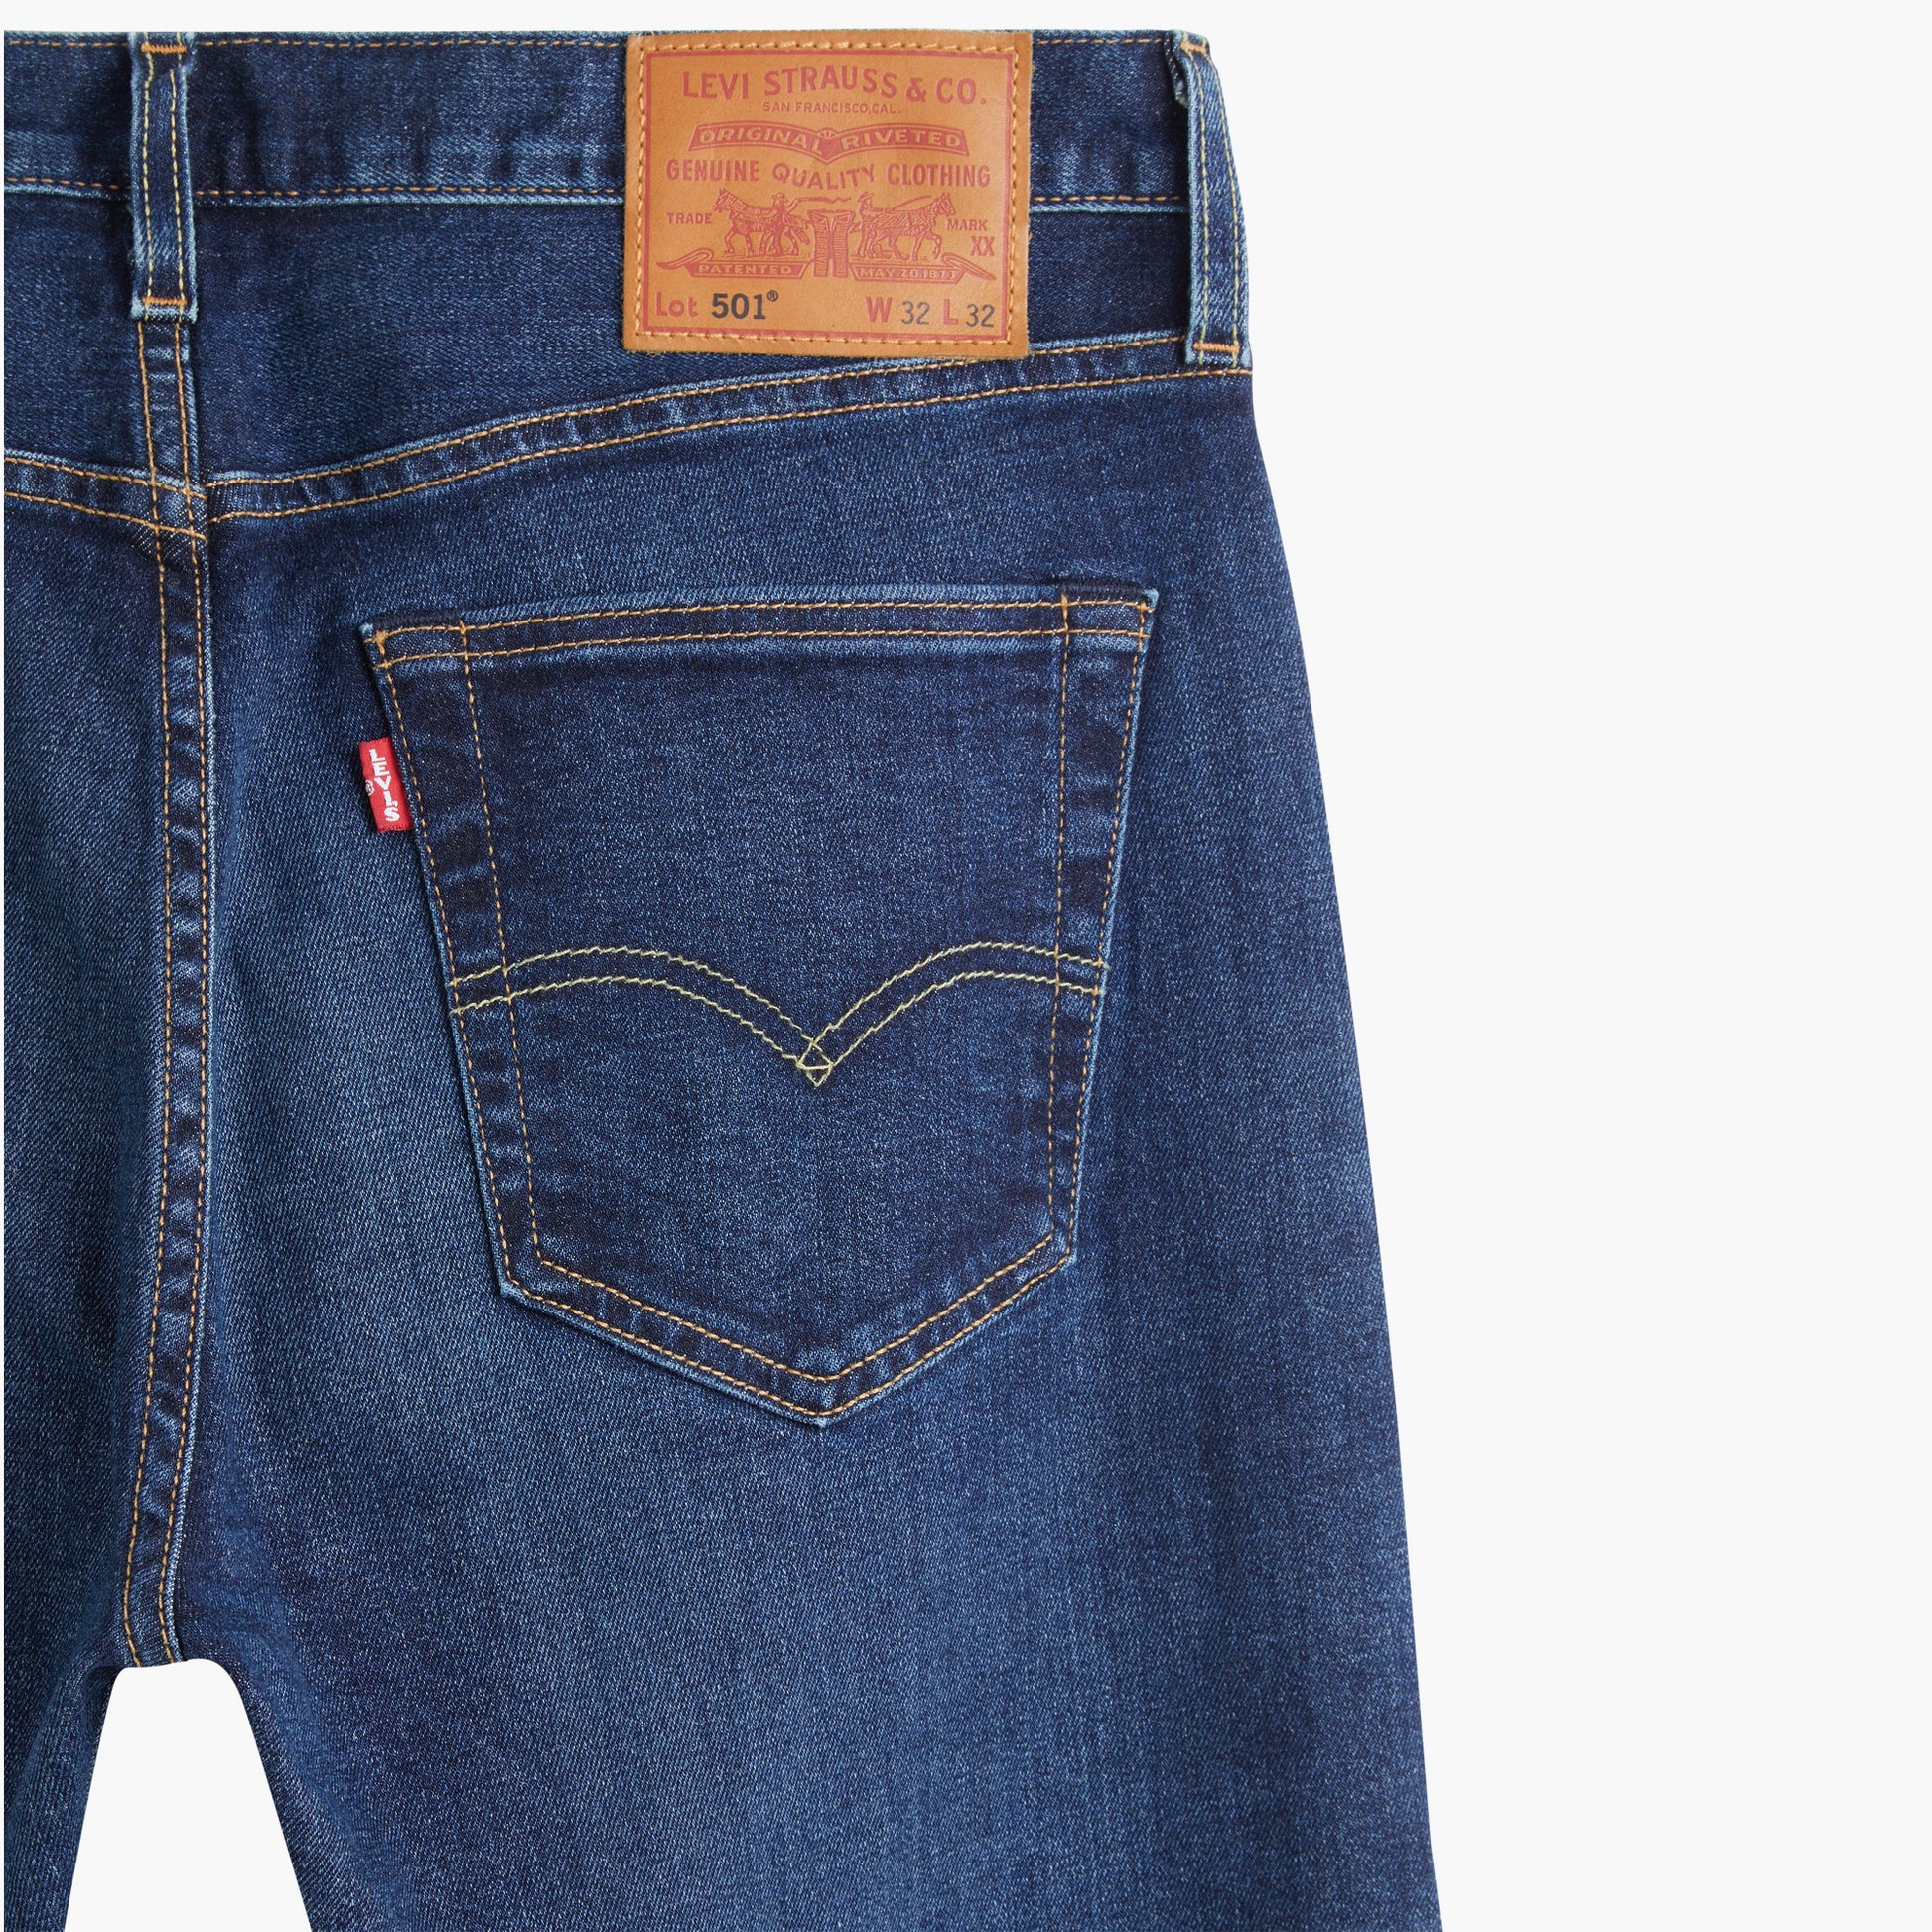 501™ Levi's Original Jeans - Do The Rump